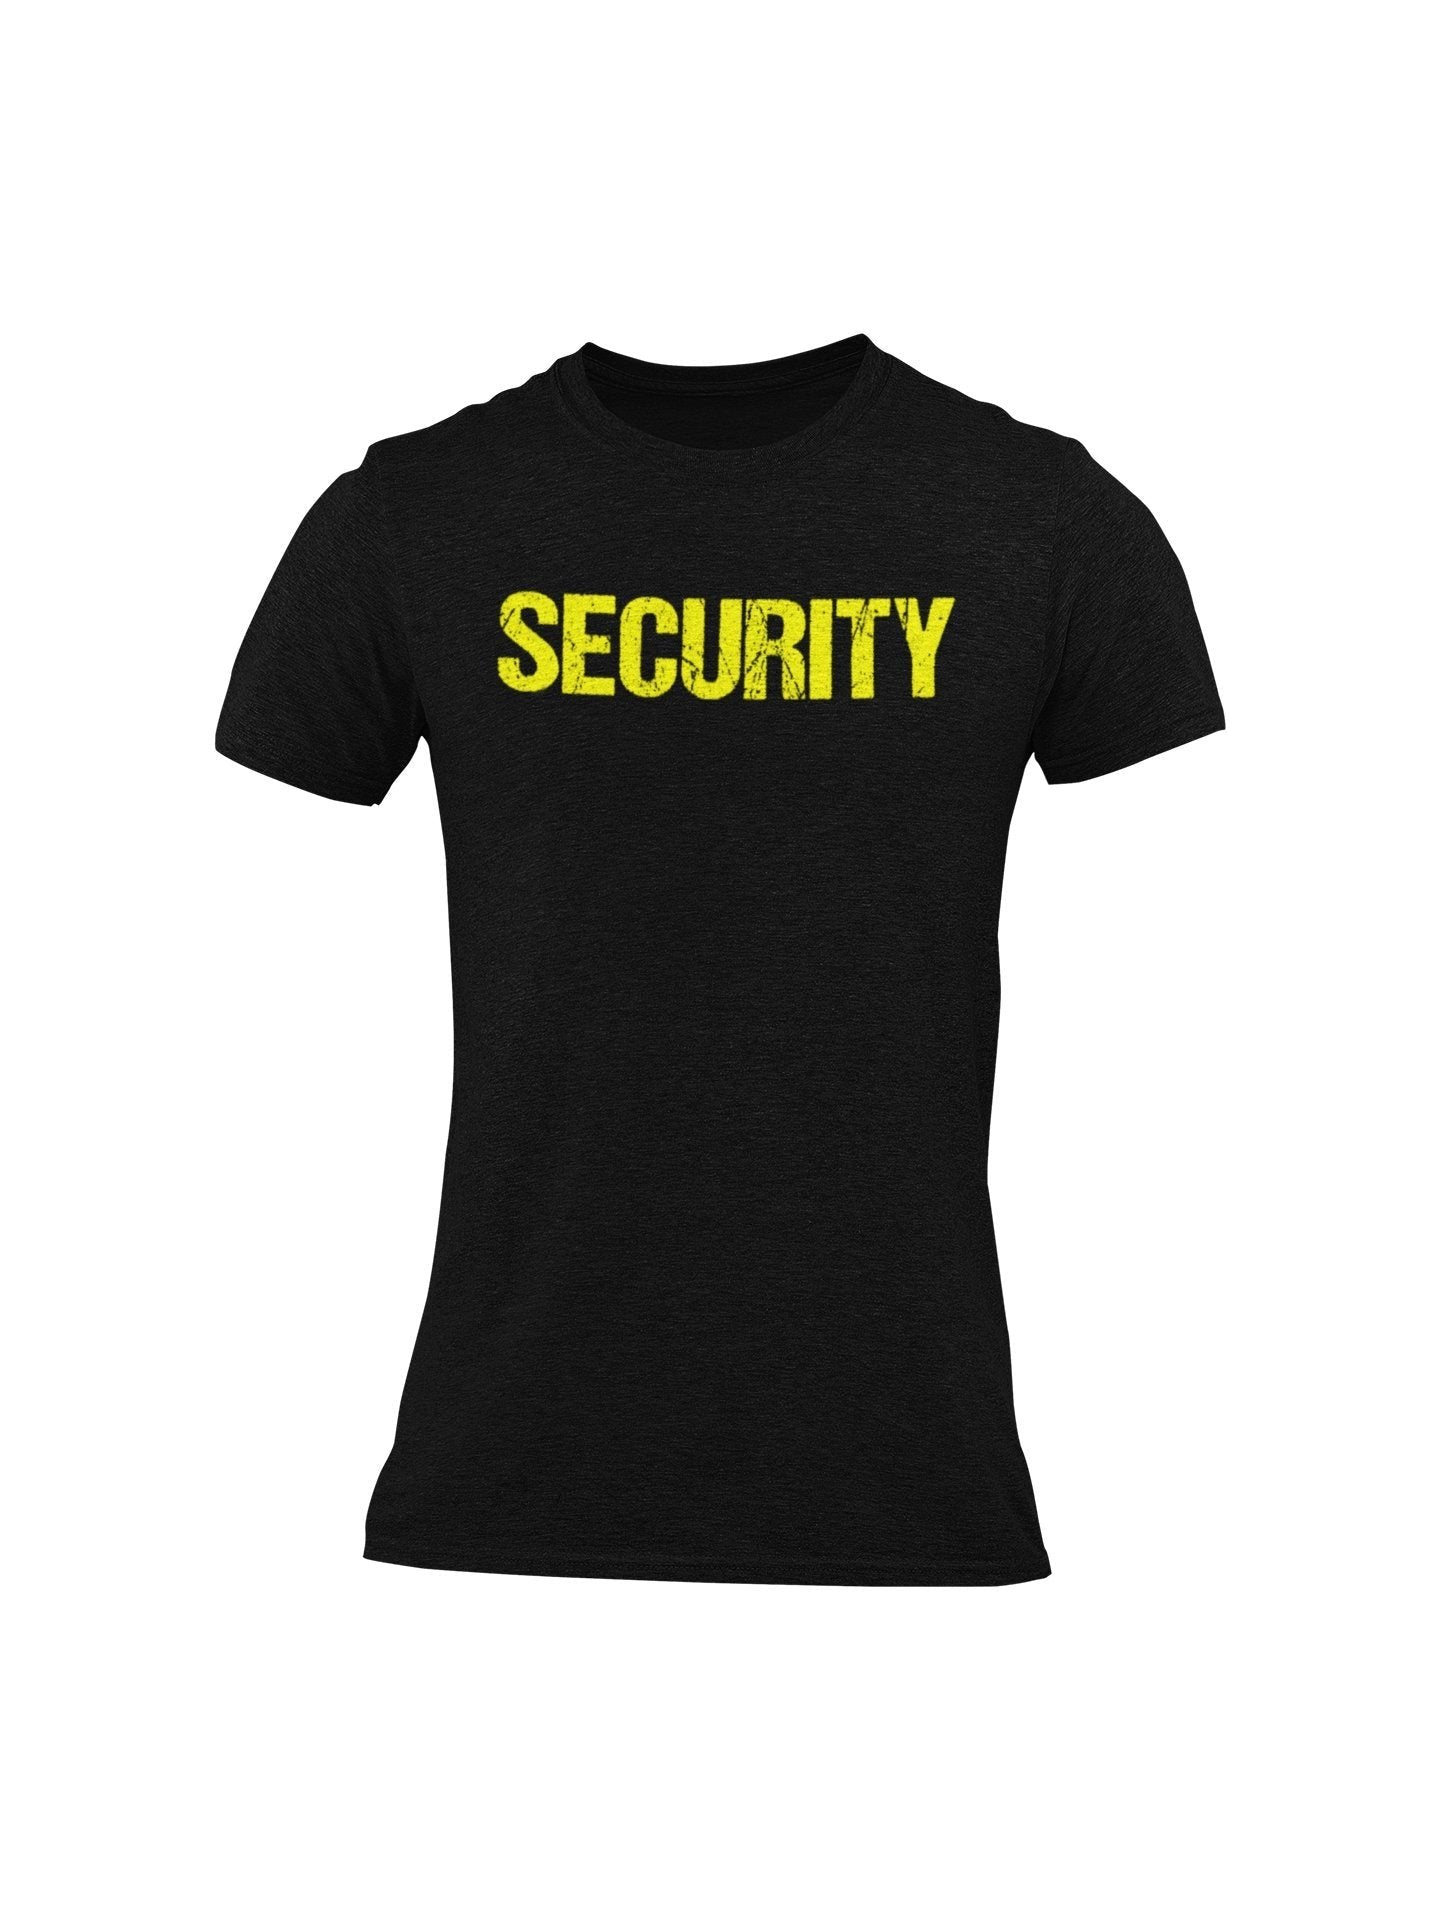 Men's Security T-Shirt (Distressed Design, Black/Neon)